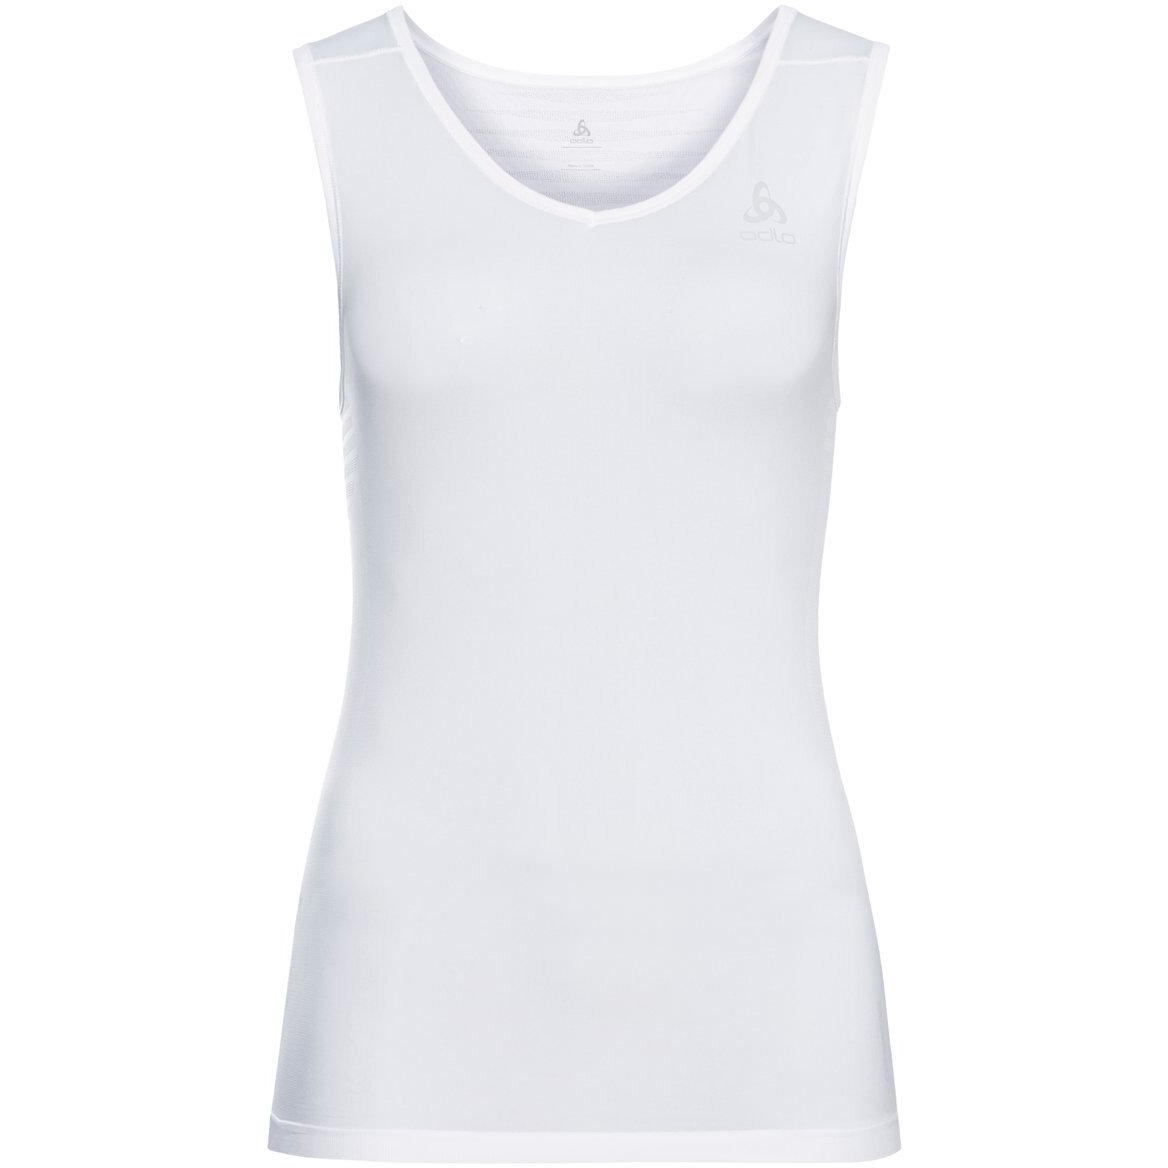 Produktbild von Odlo Performance X-Light V-Neck Ärmelloses Unterhemd Damen - weiß